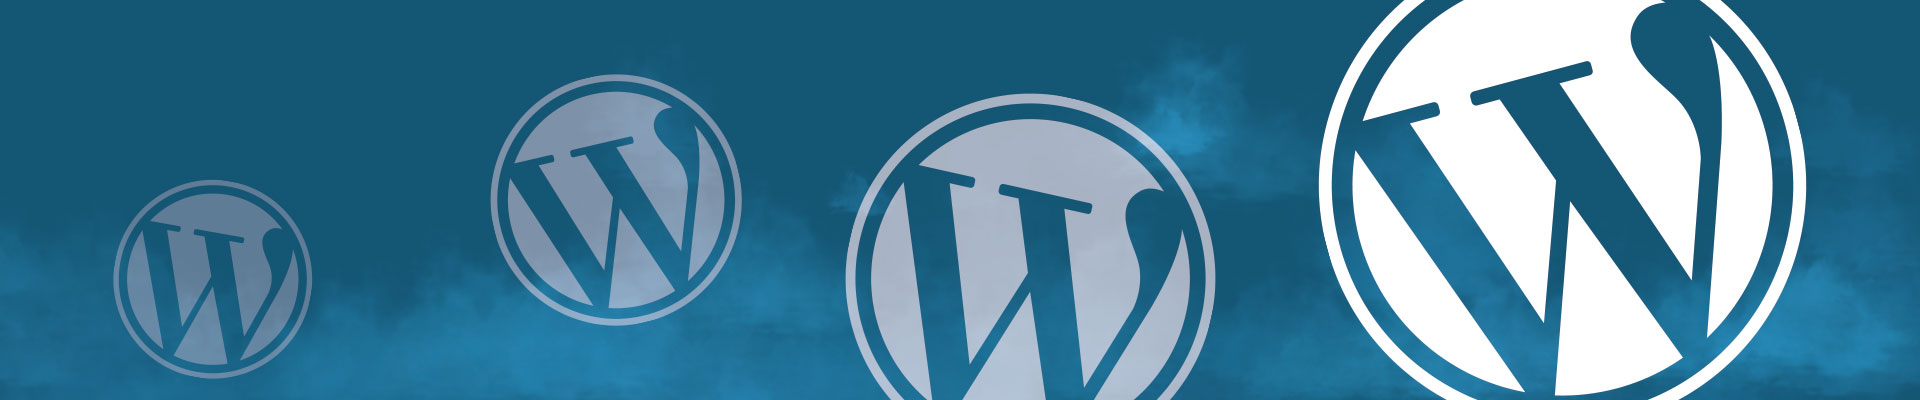 Sénior Développeur Wordpress, Full stack, création de thème Wordpress, création de plugins wordpress